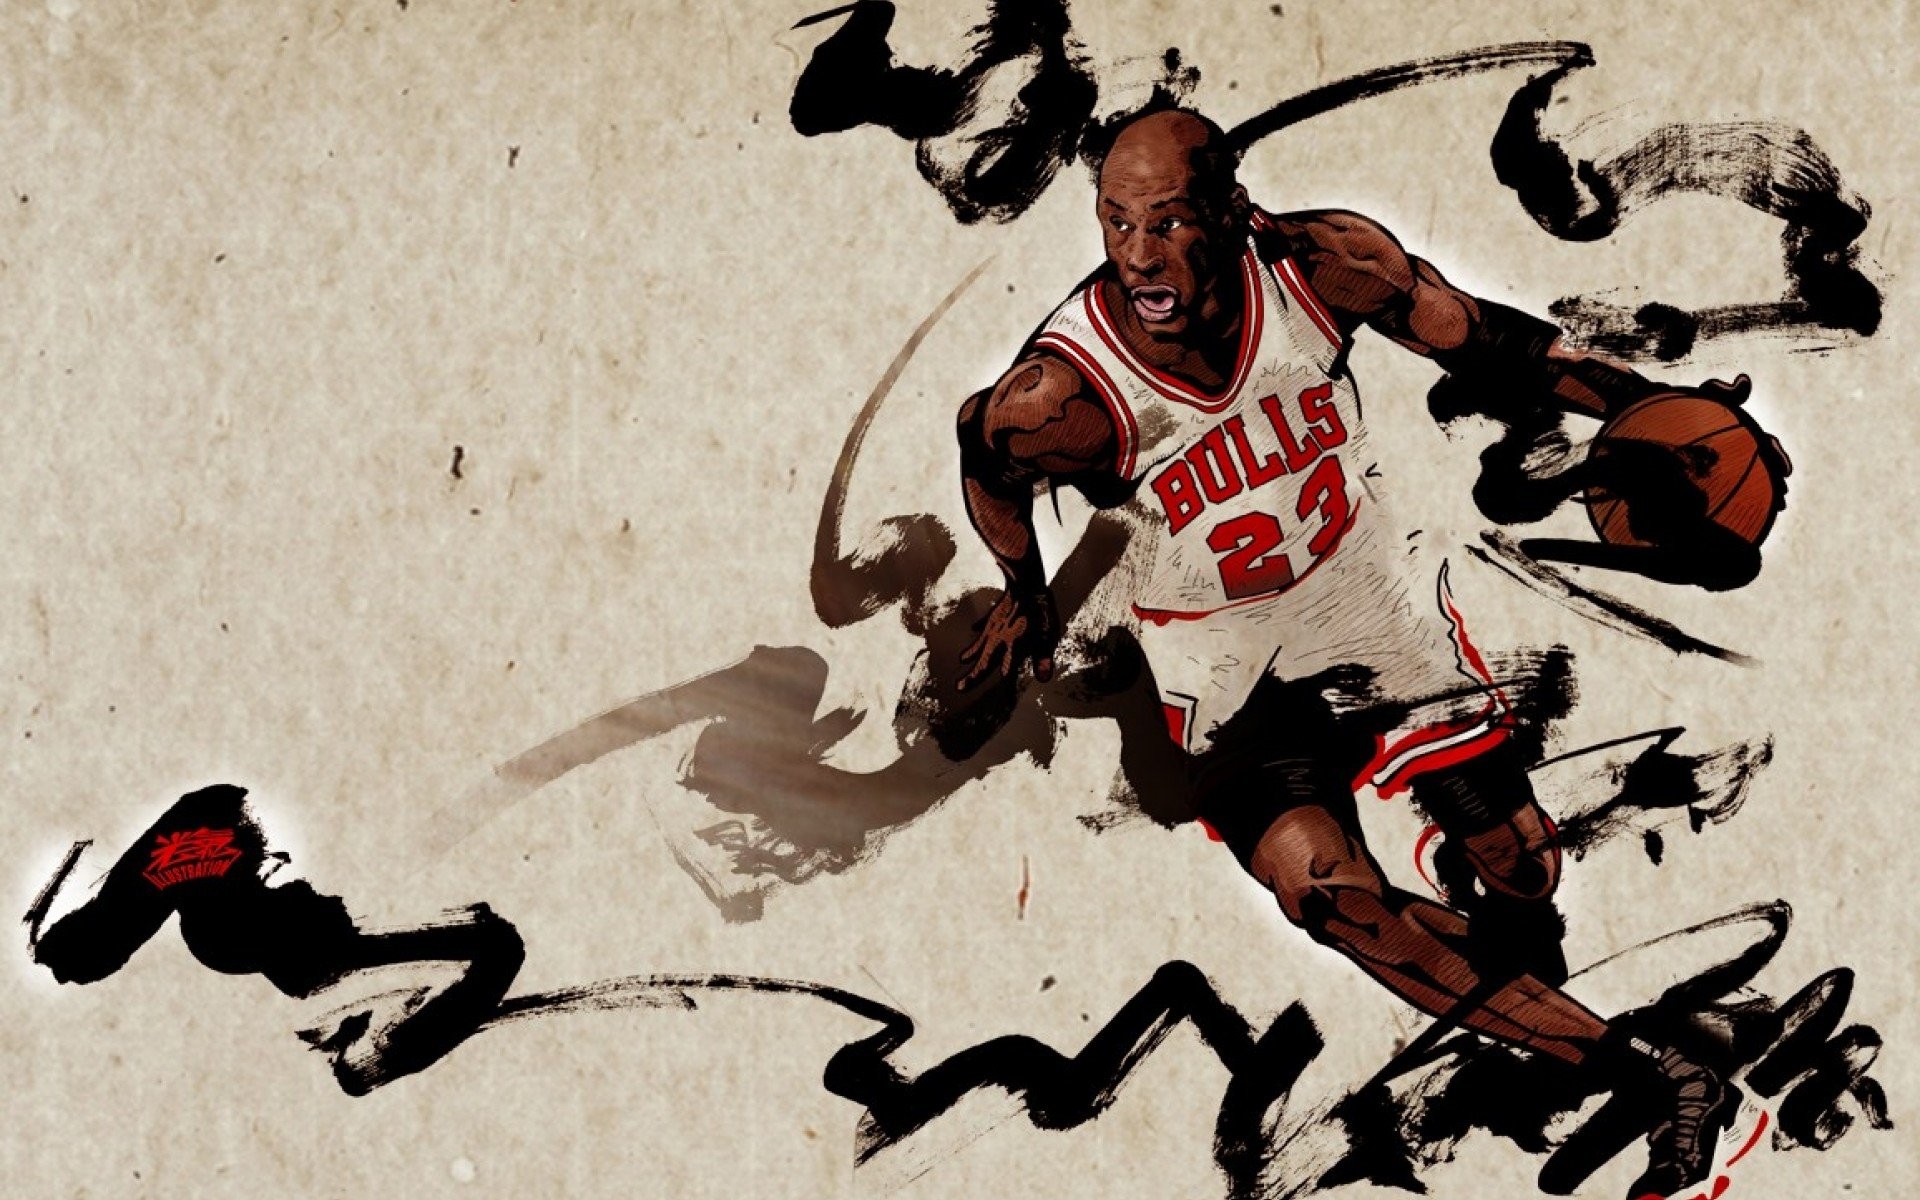 1920x1200 ... Michael Jordan 1920Ã1200 Dunk Wallpaper | Basketball Wallpapers at .